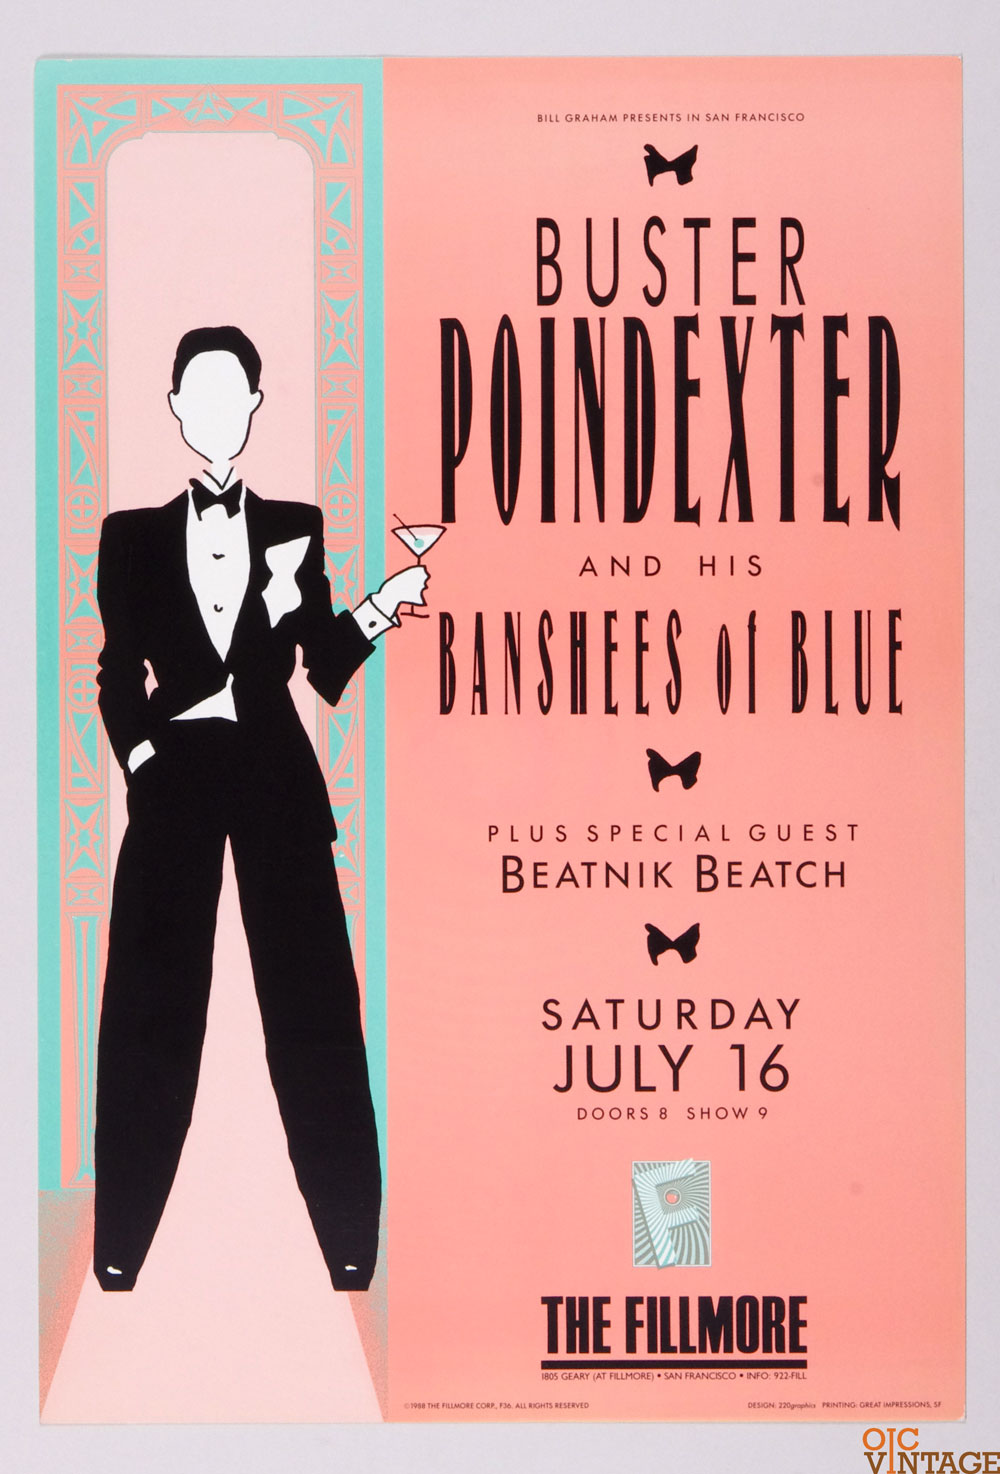 Buster Poindexter and His Banshees of Blue Poster 1988 Jul 16 New Fillmore San Francisco